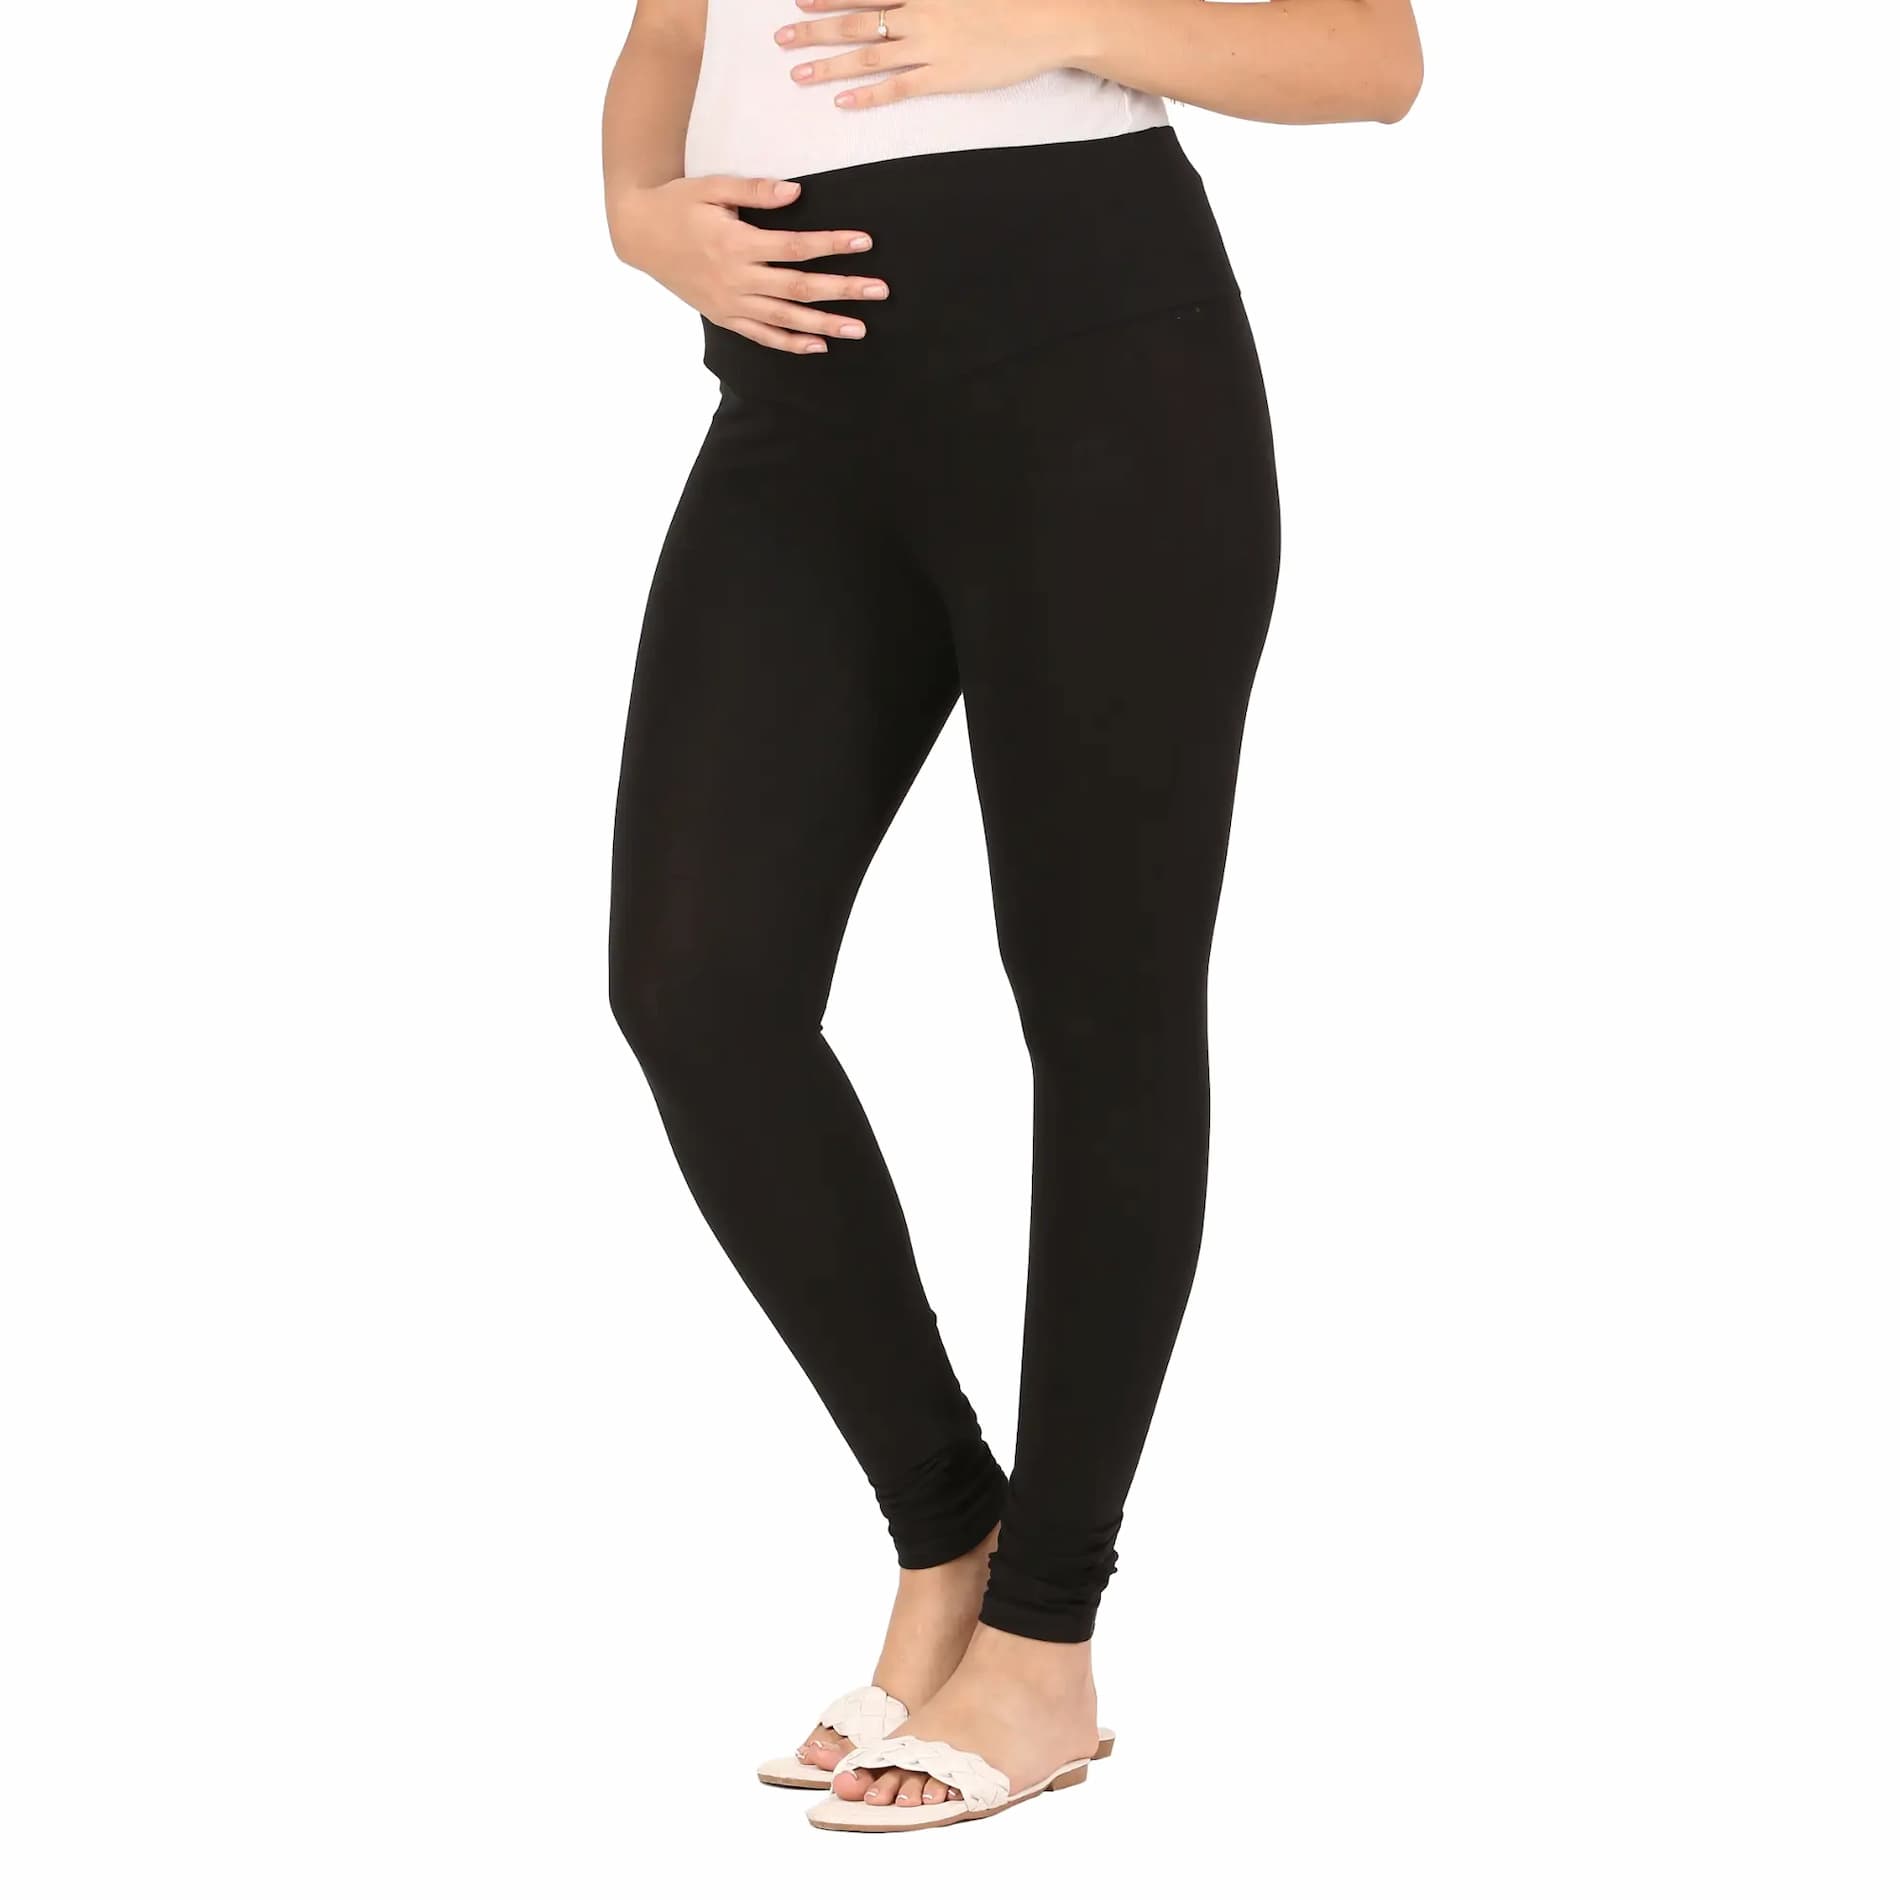 Mylo Stretchable Pregnancy & Post Delivery Leggings - Black (XXL)